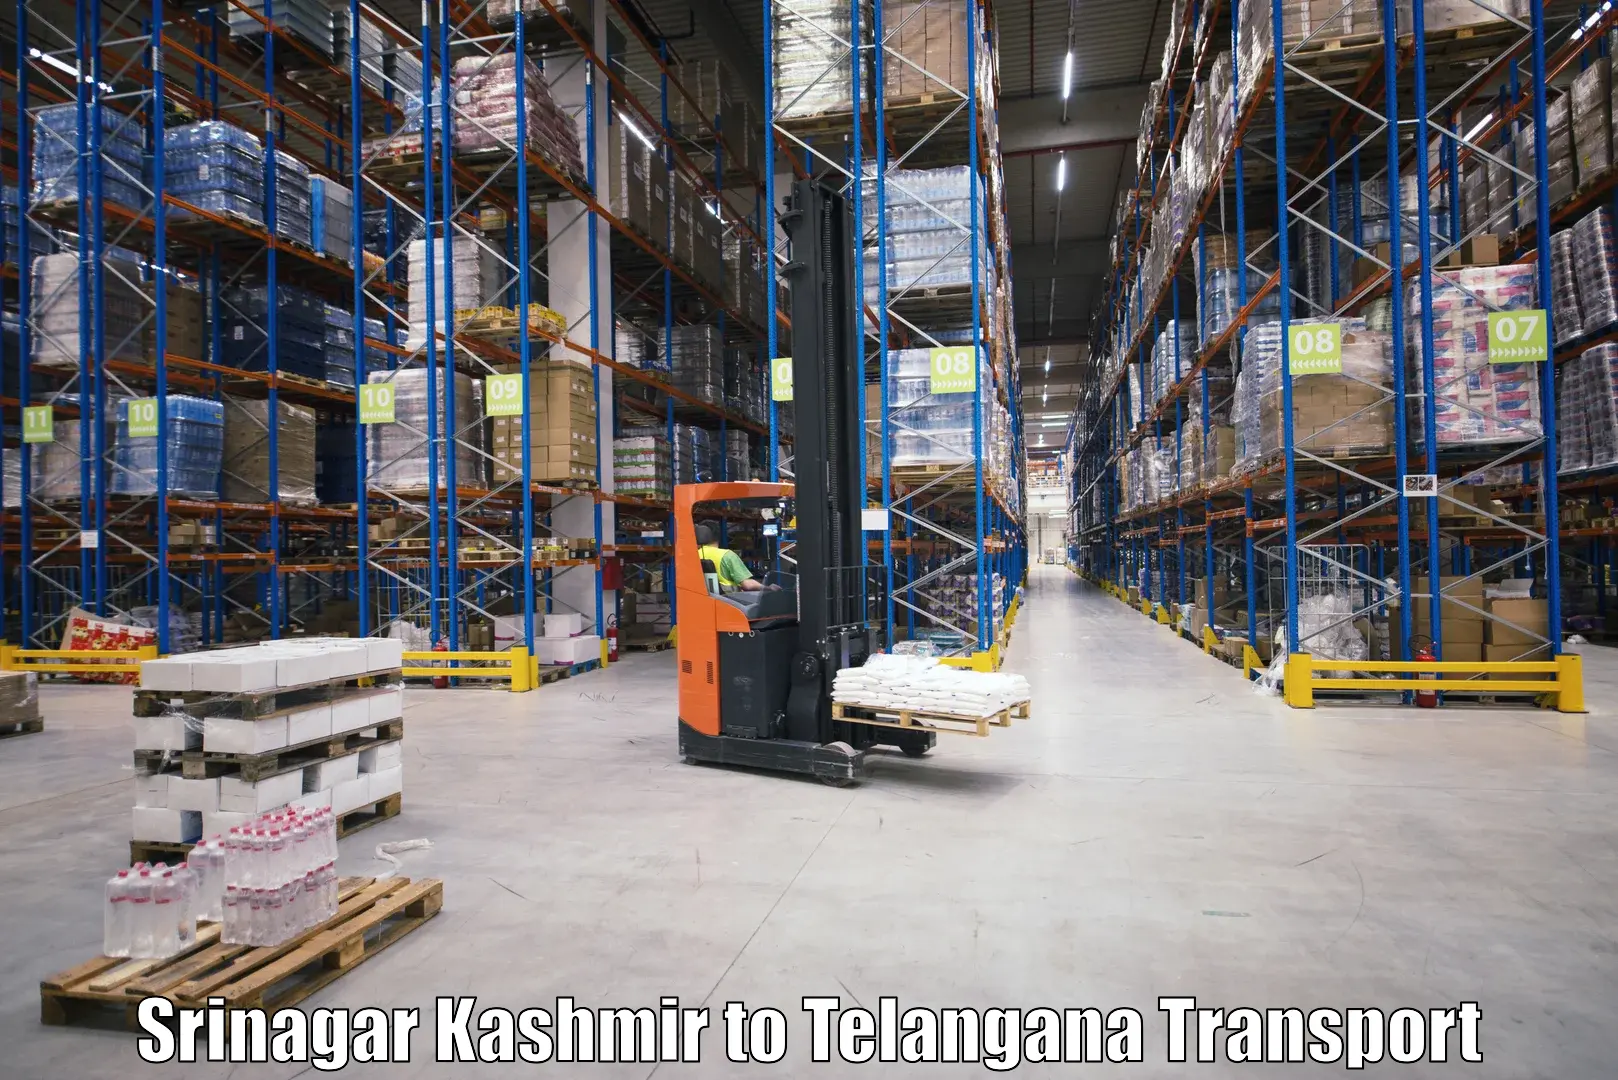 Transport in sharing Srinagar Kashmir to Gangadhara